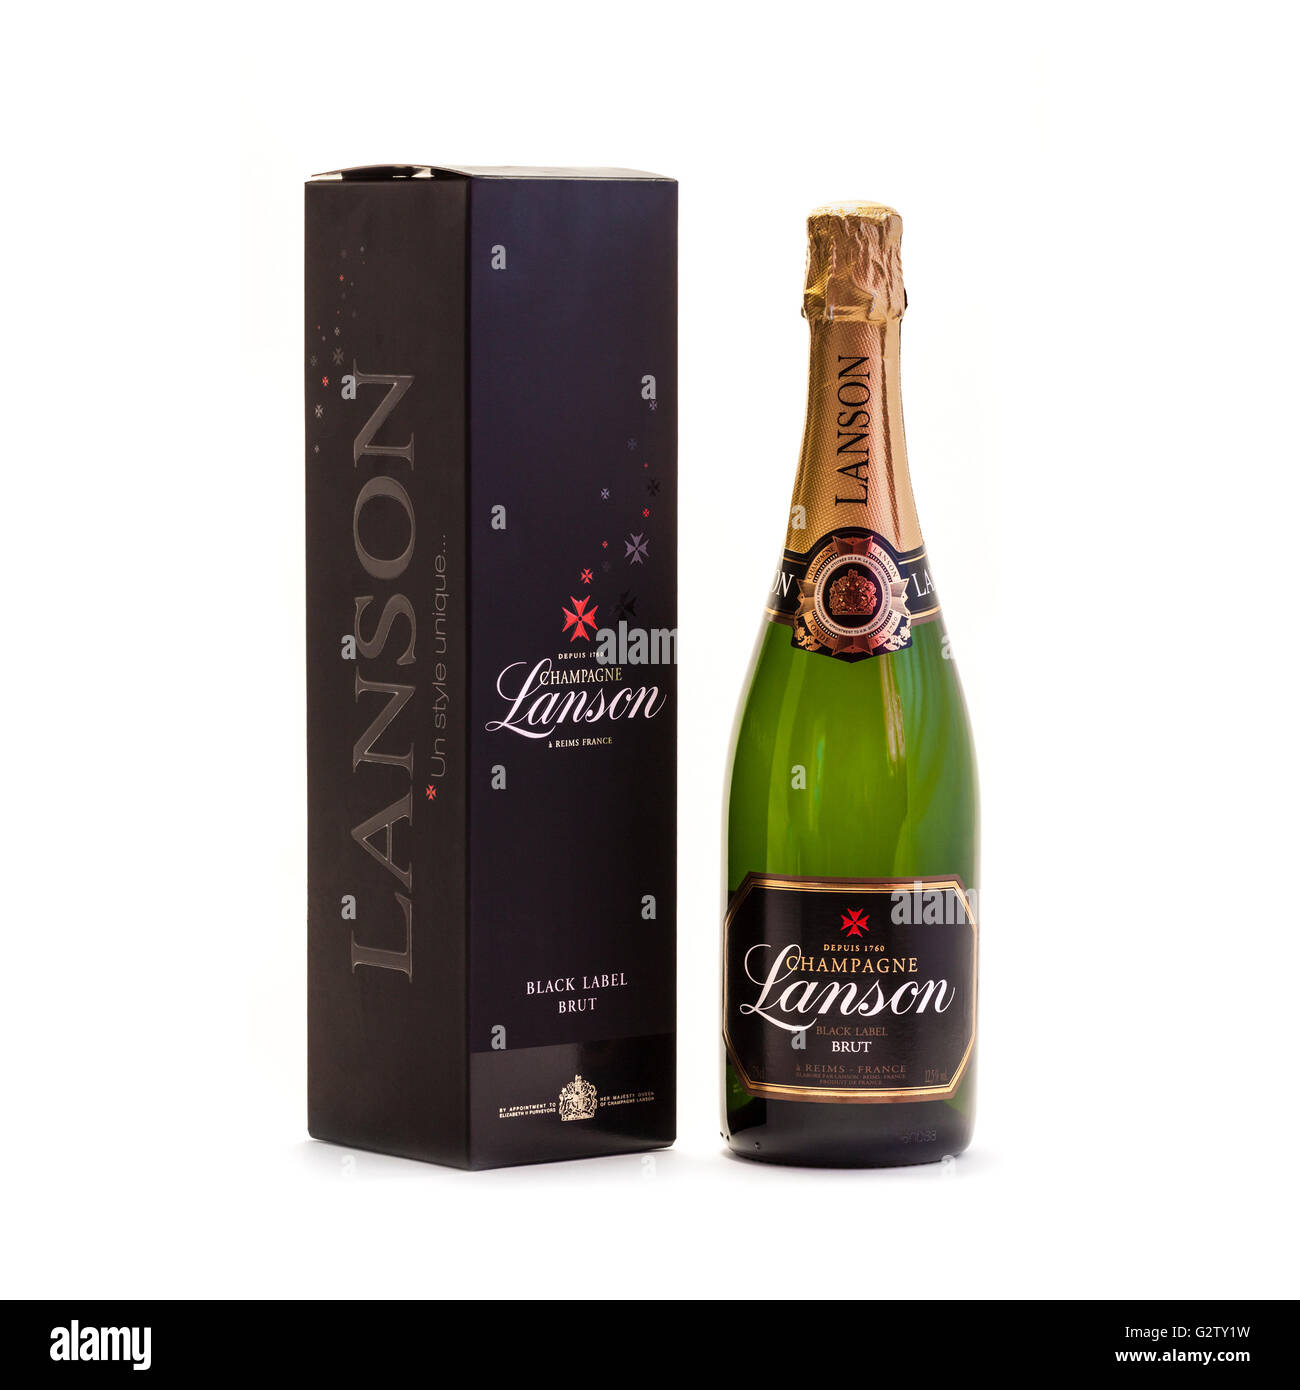 Botella de Lanson Black Label Brut Champagne con caja de regalo. Lanson fue fundada en 1760 por un juez, François Delamotte. Foto de stock